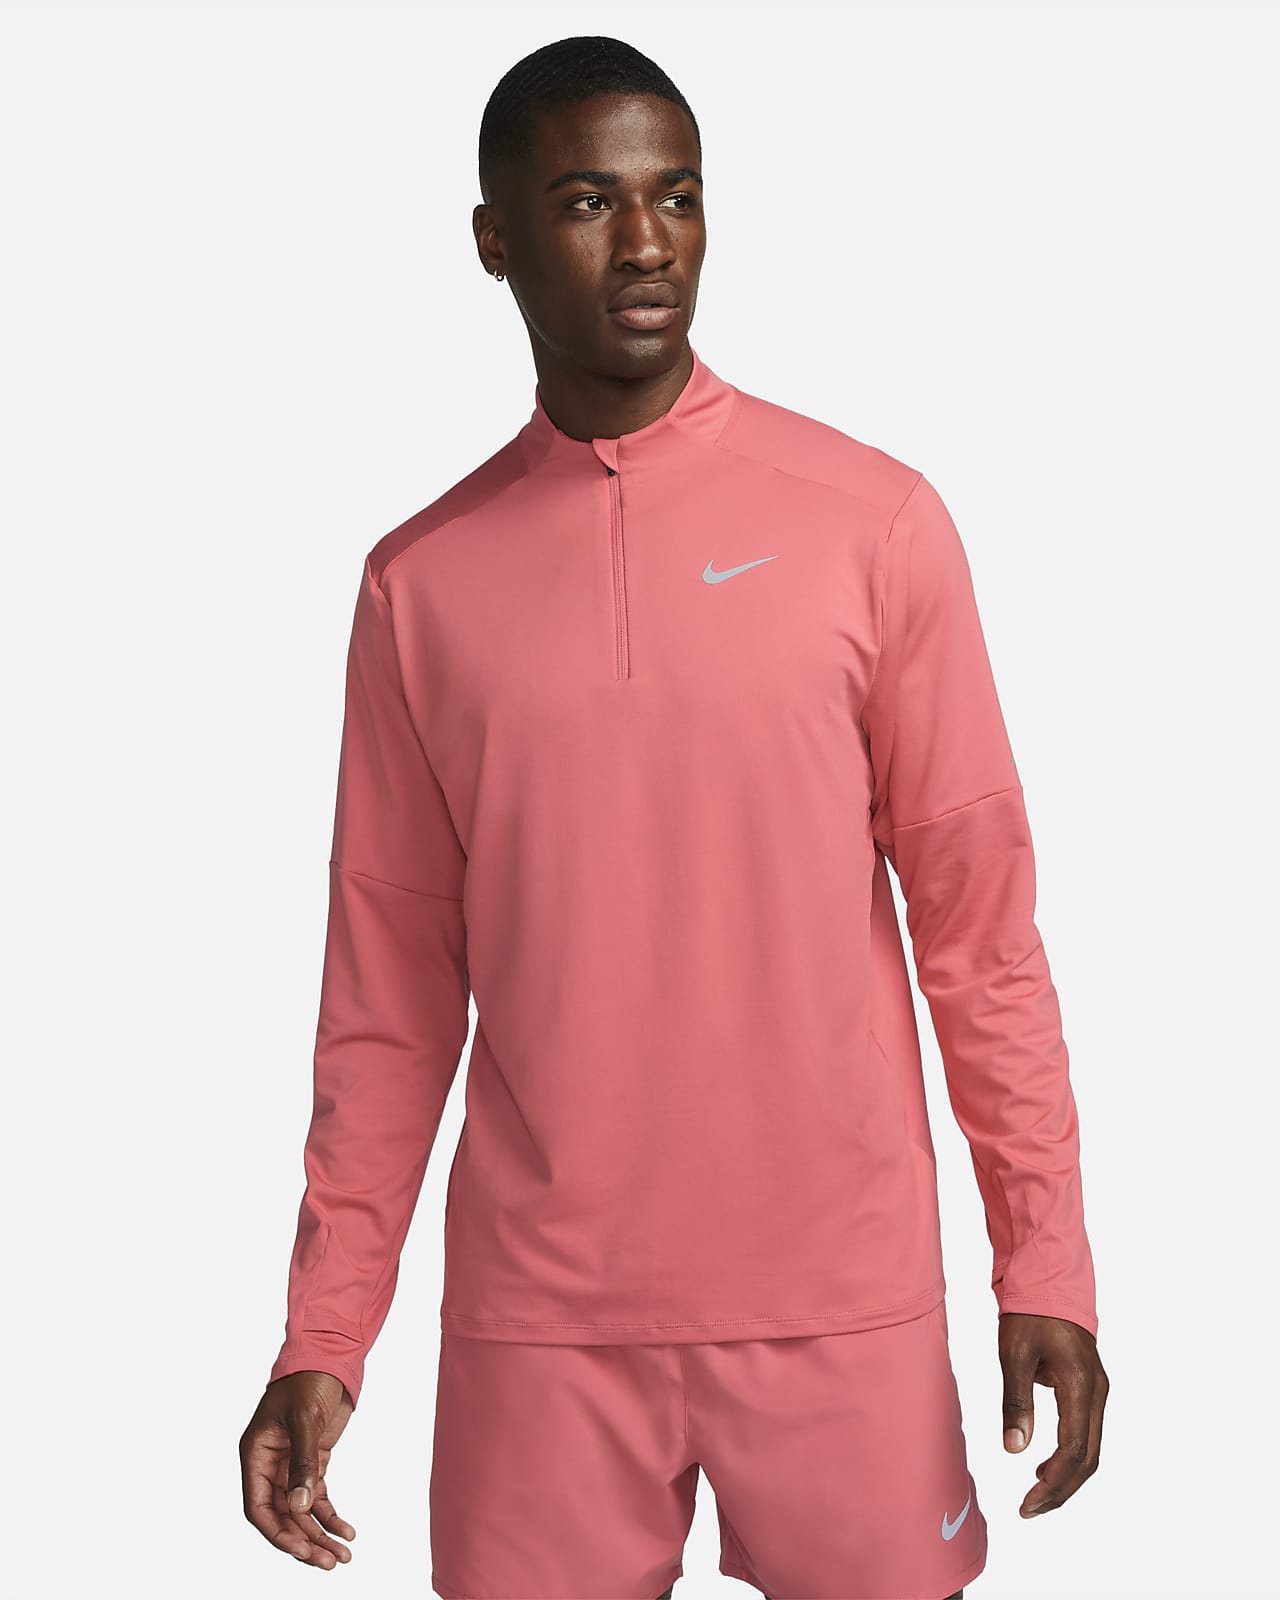 Nike Men's Dri-FIT 3/4 Sleeve Baseball T-shirt